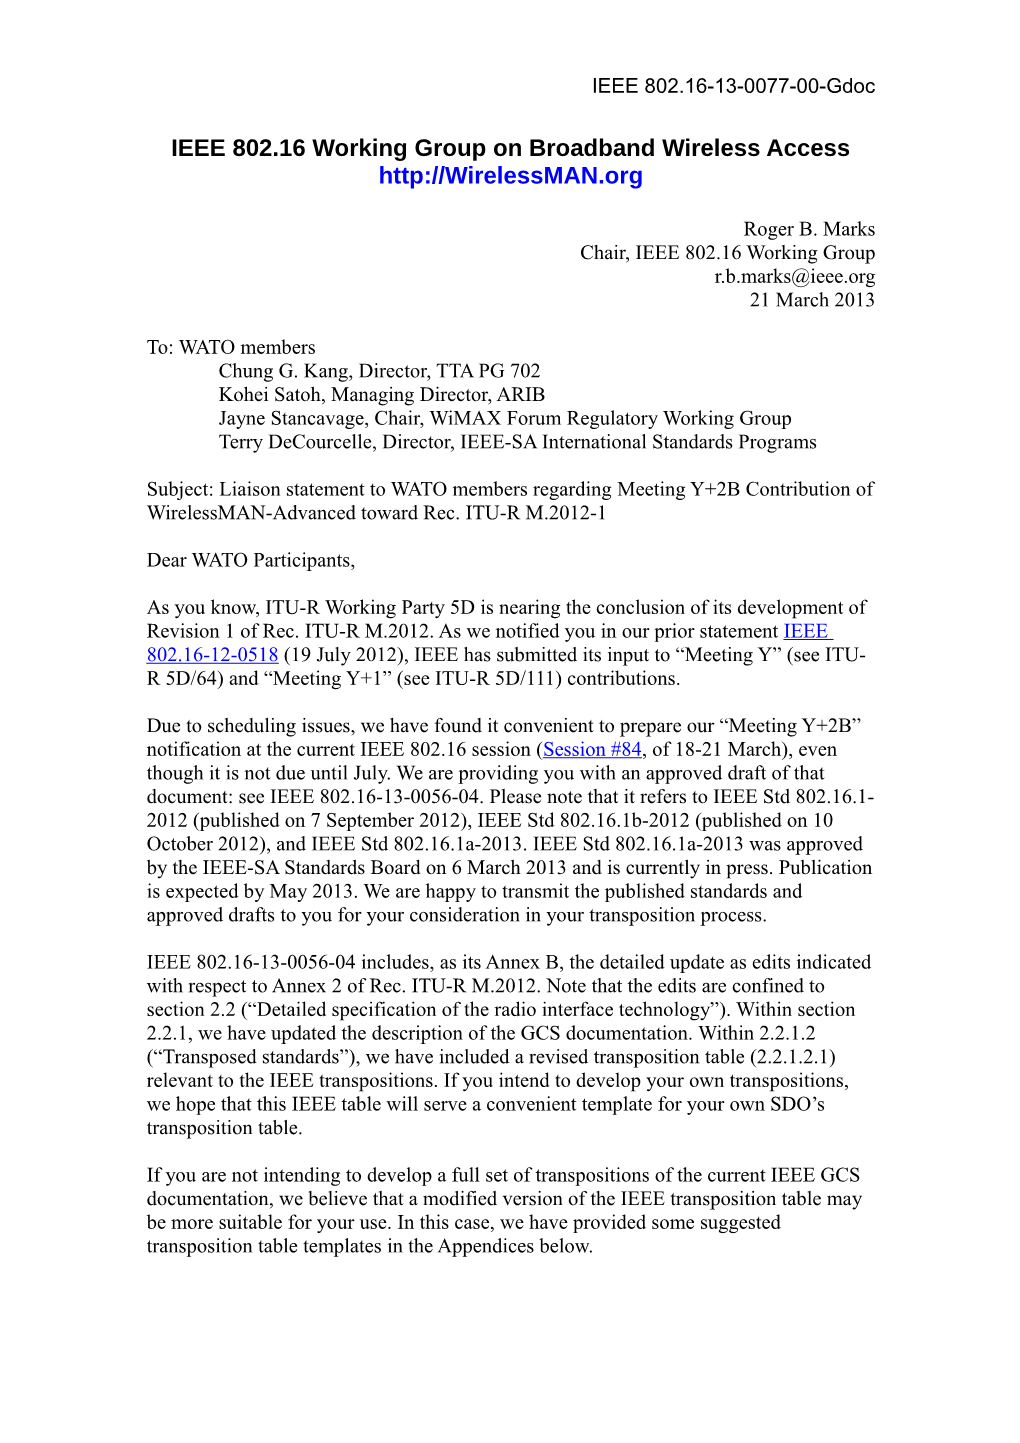 IEEE 802.16 Working Group on Broadband Wireless Access